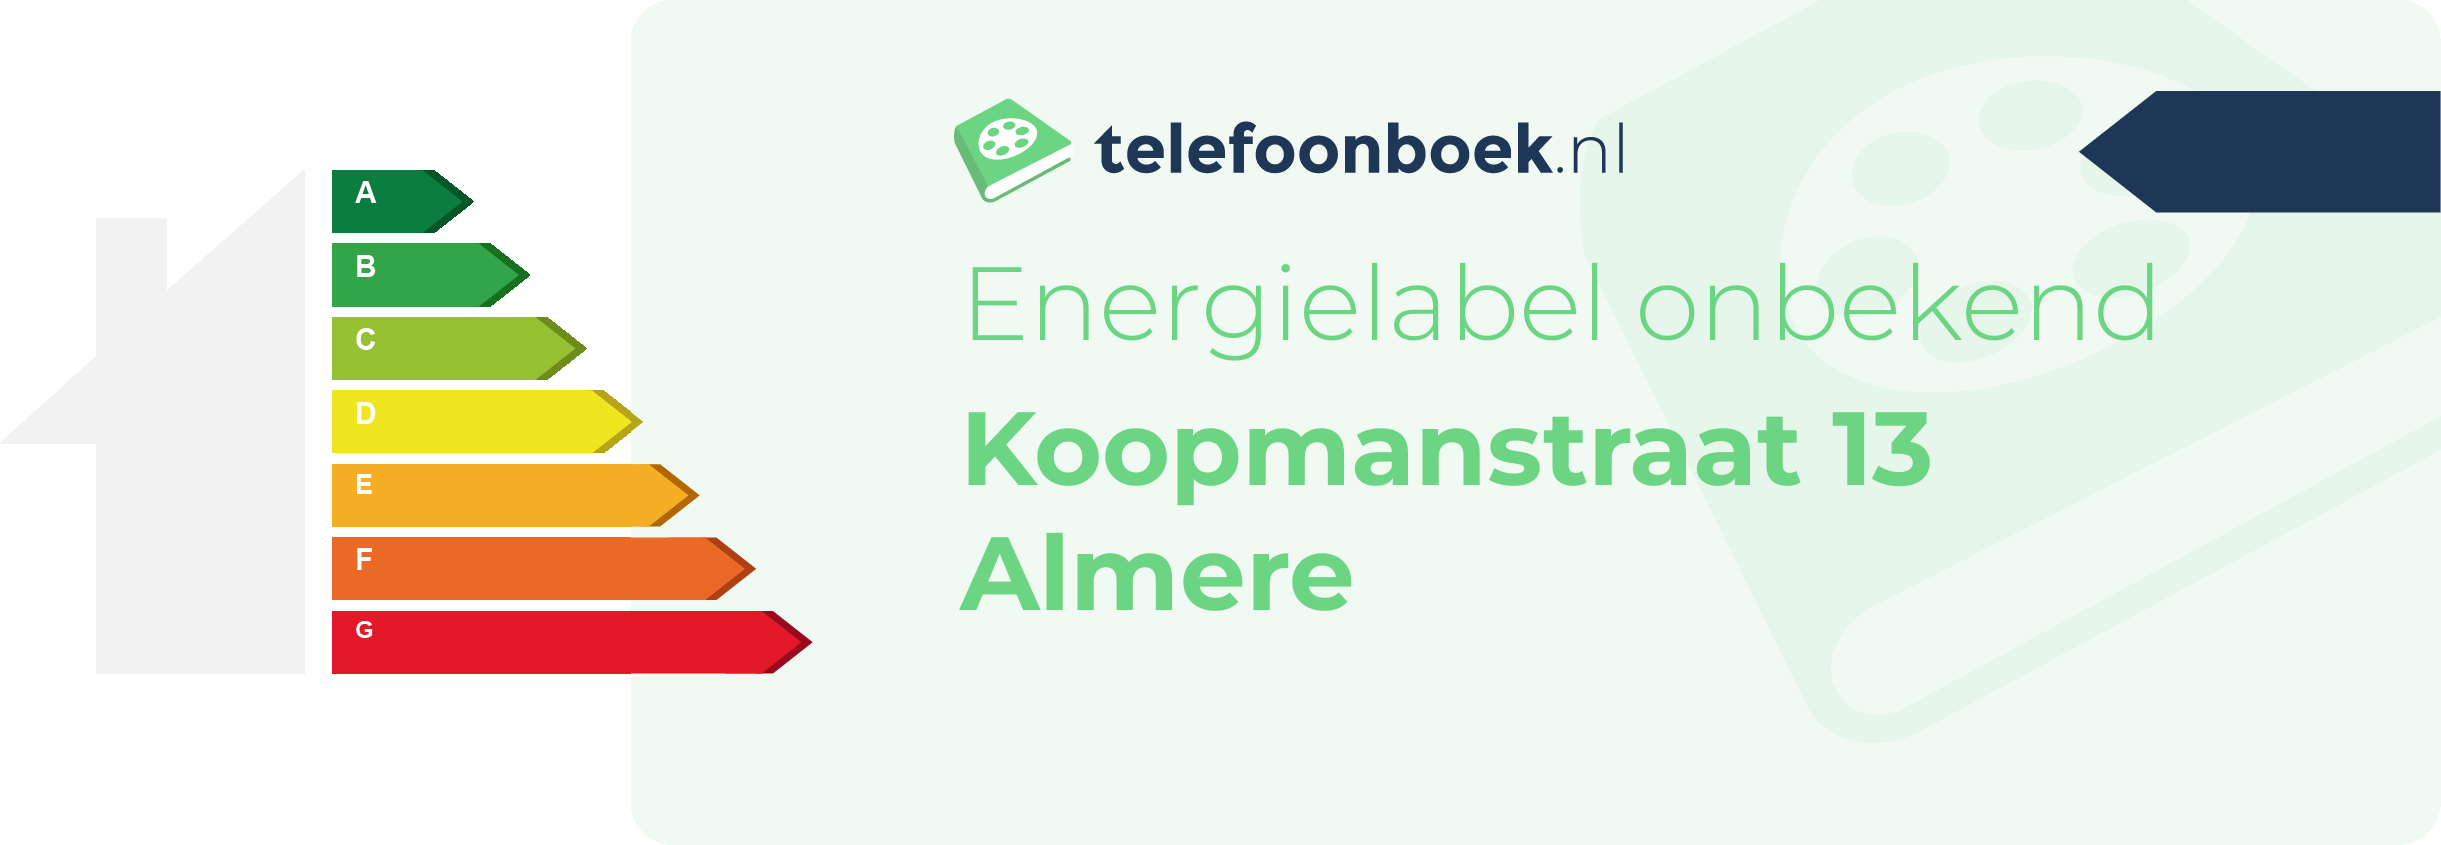 Energielabel Koopmanstraat 13 Almere